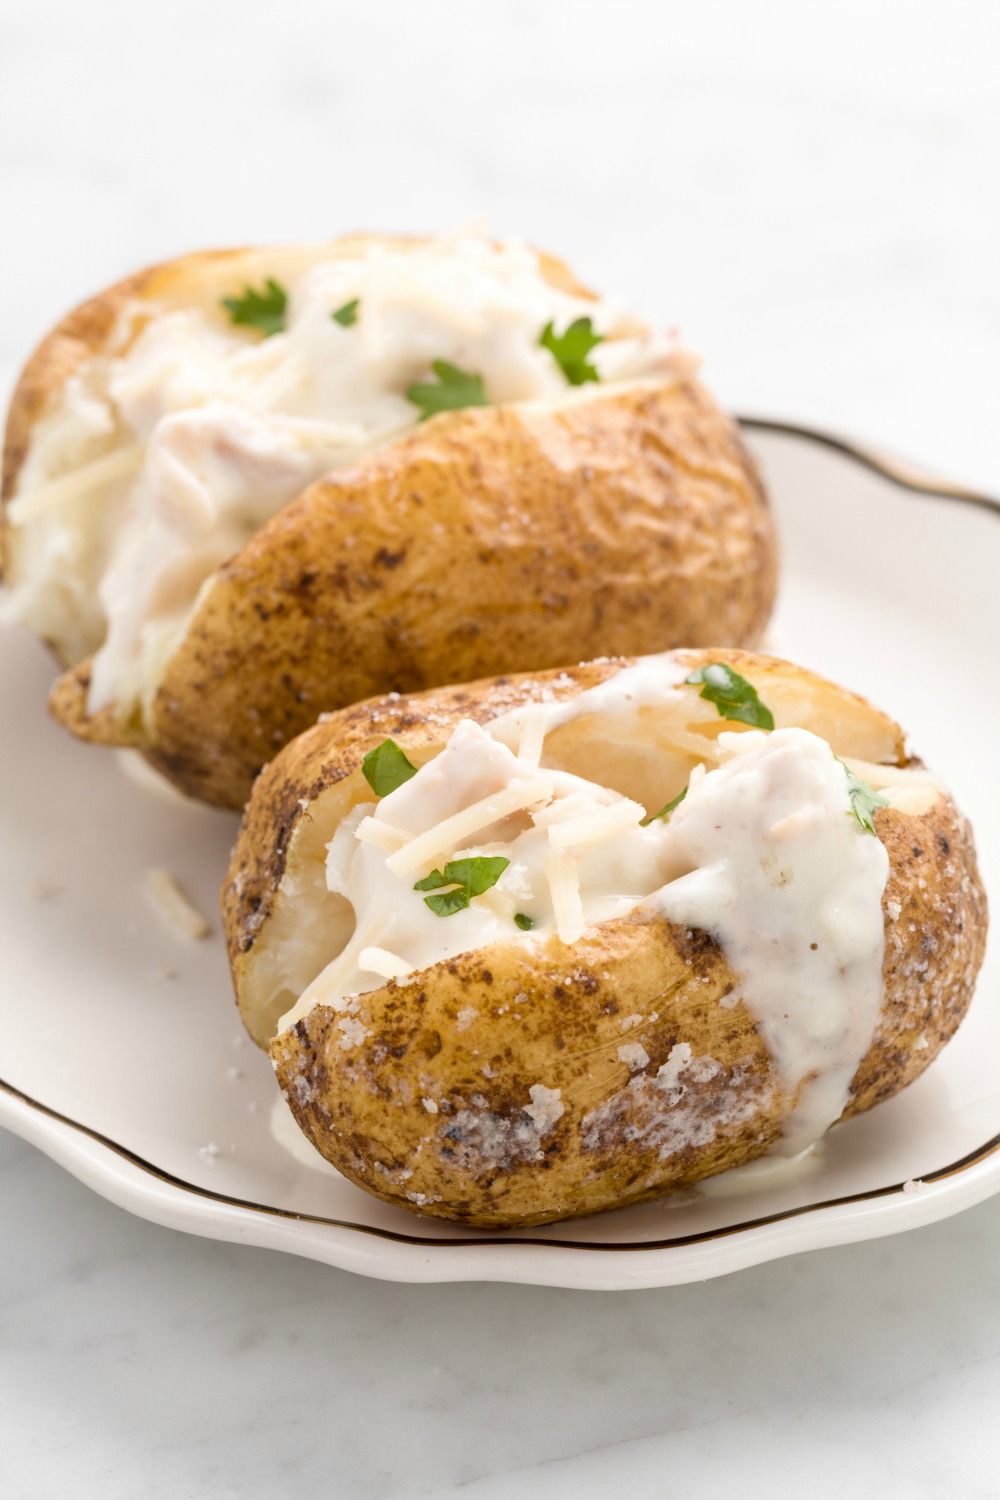 20 Best Baked Potato Recipes   Fully Loaded Baked Potatoes